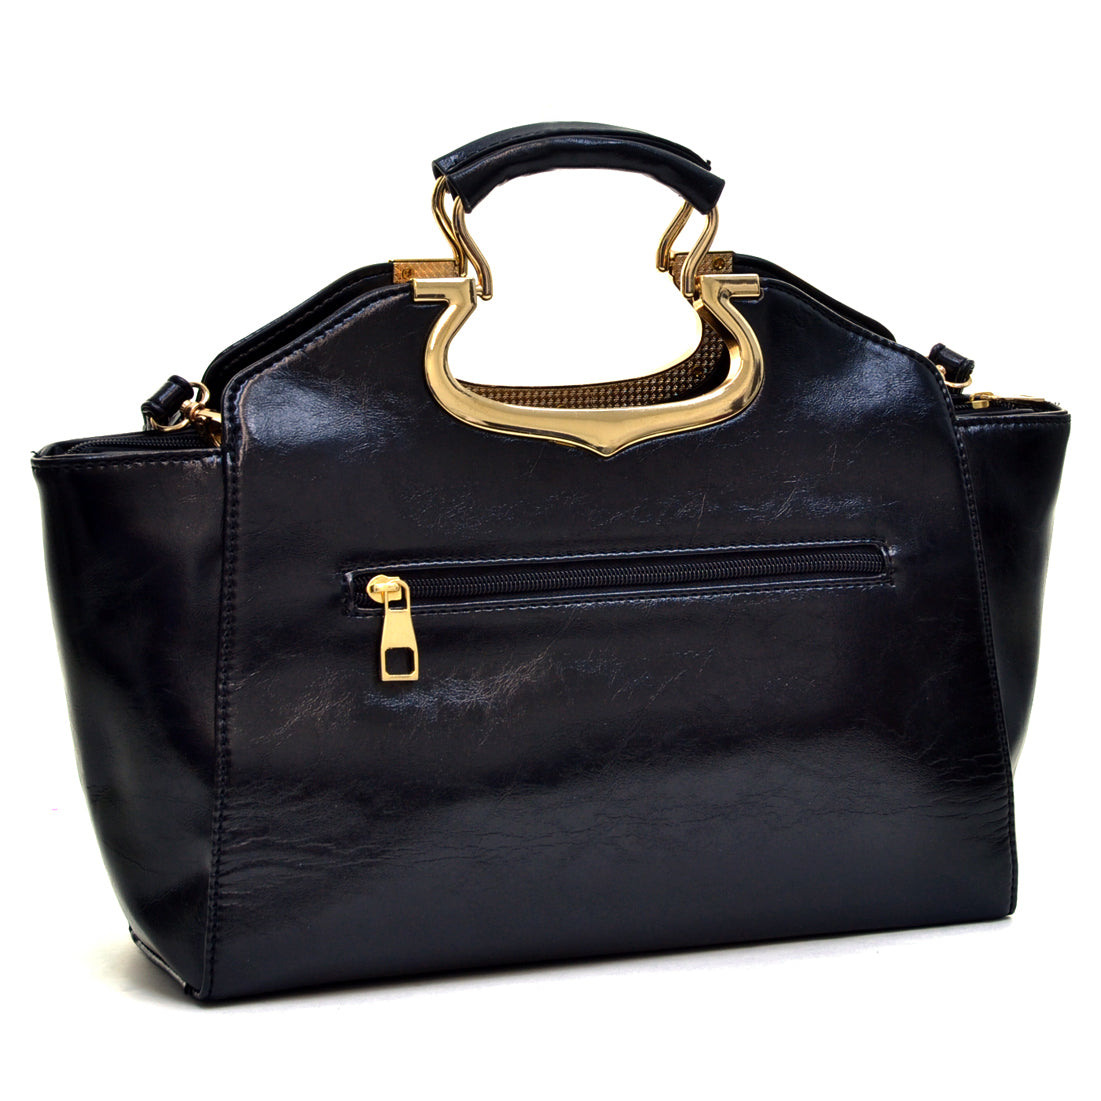 Dasein® Drop Handle Raised Stitch Winged Handbag w/Removable Shoulder Strap